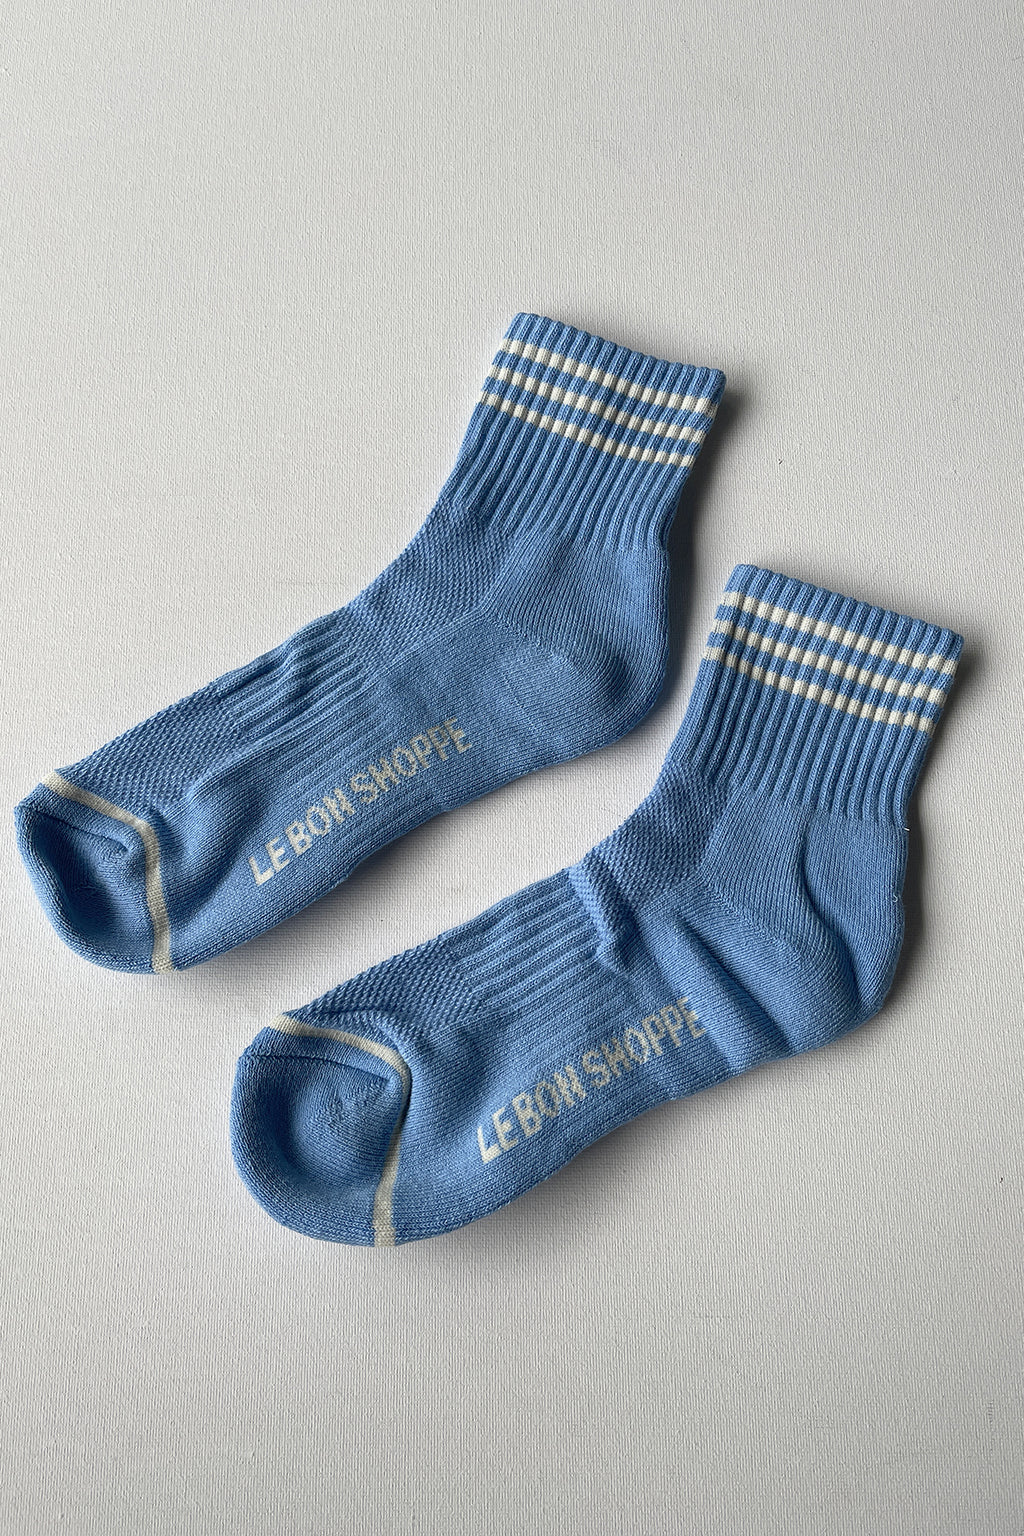 Le Bon Shoppe Girlfriend Socks - Parisian Blue